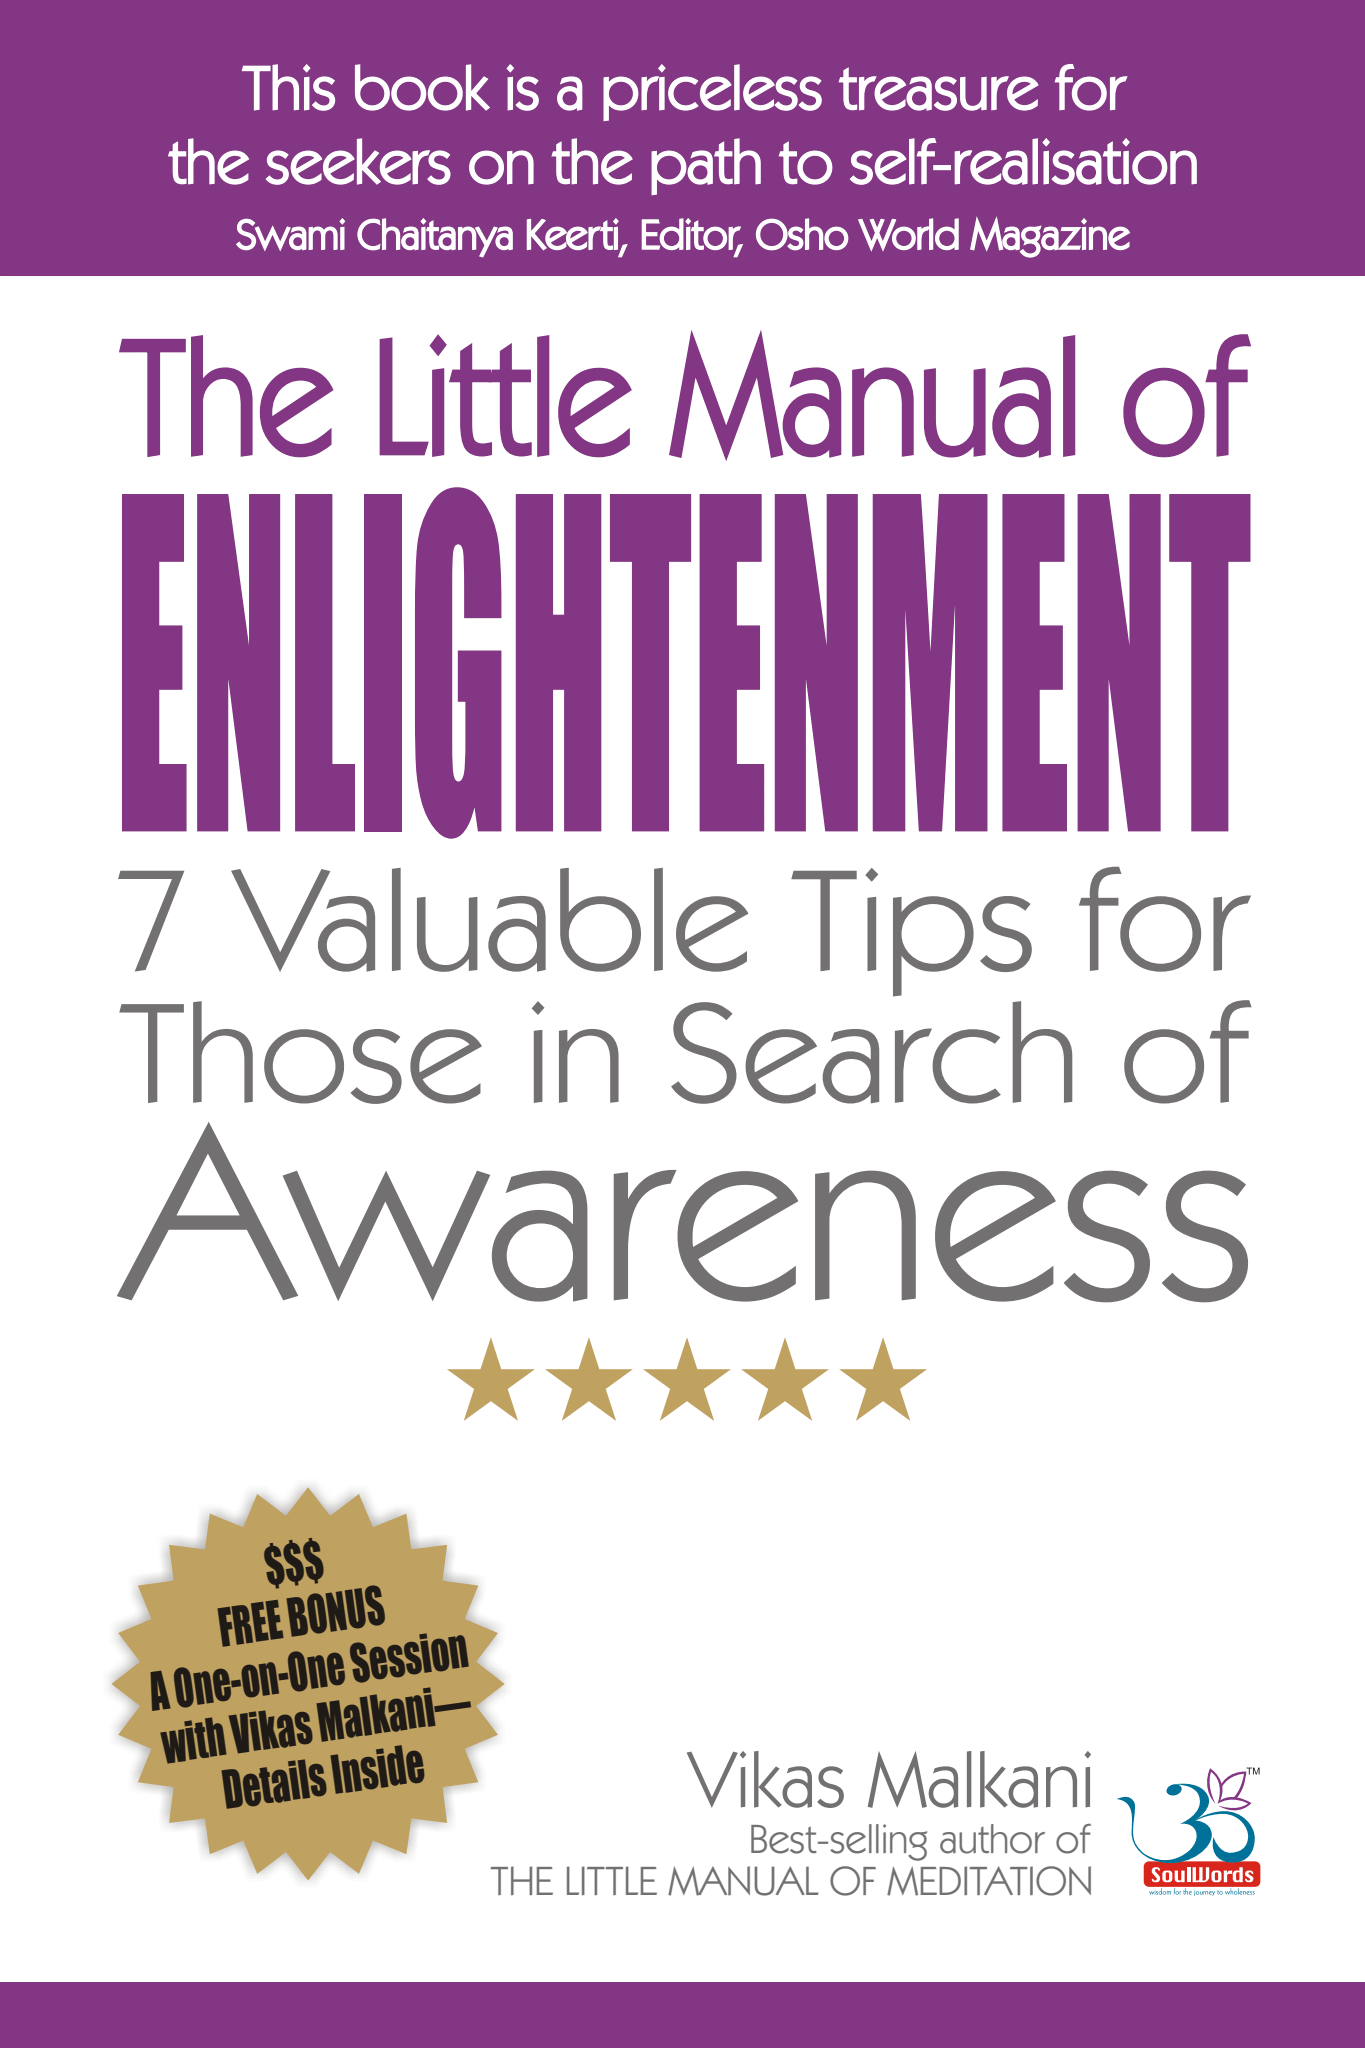 The Little Manual of Enlightment